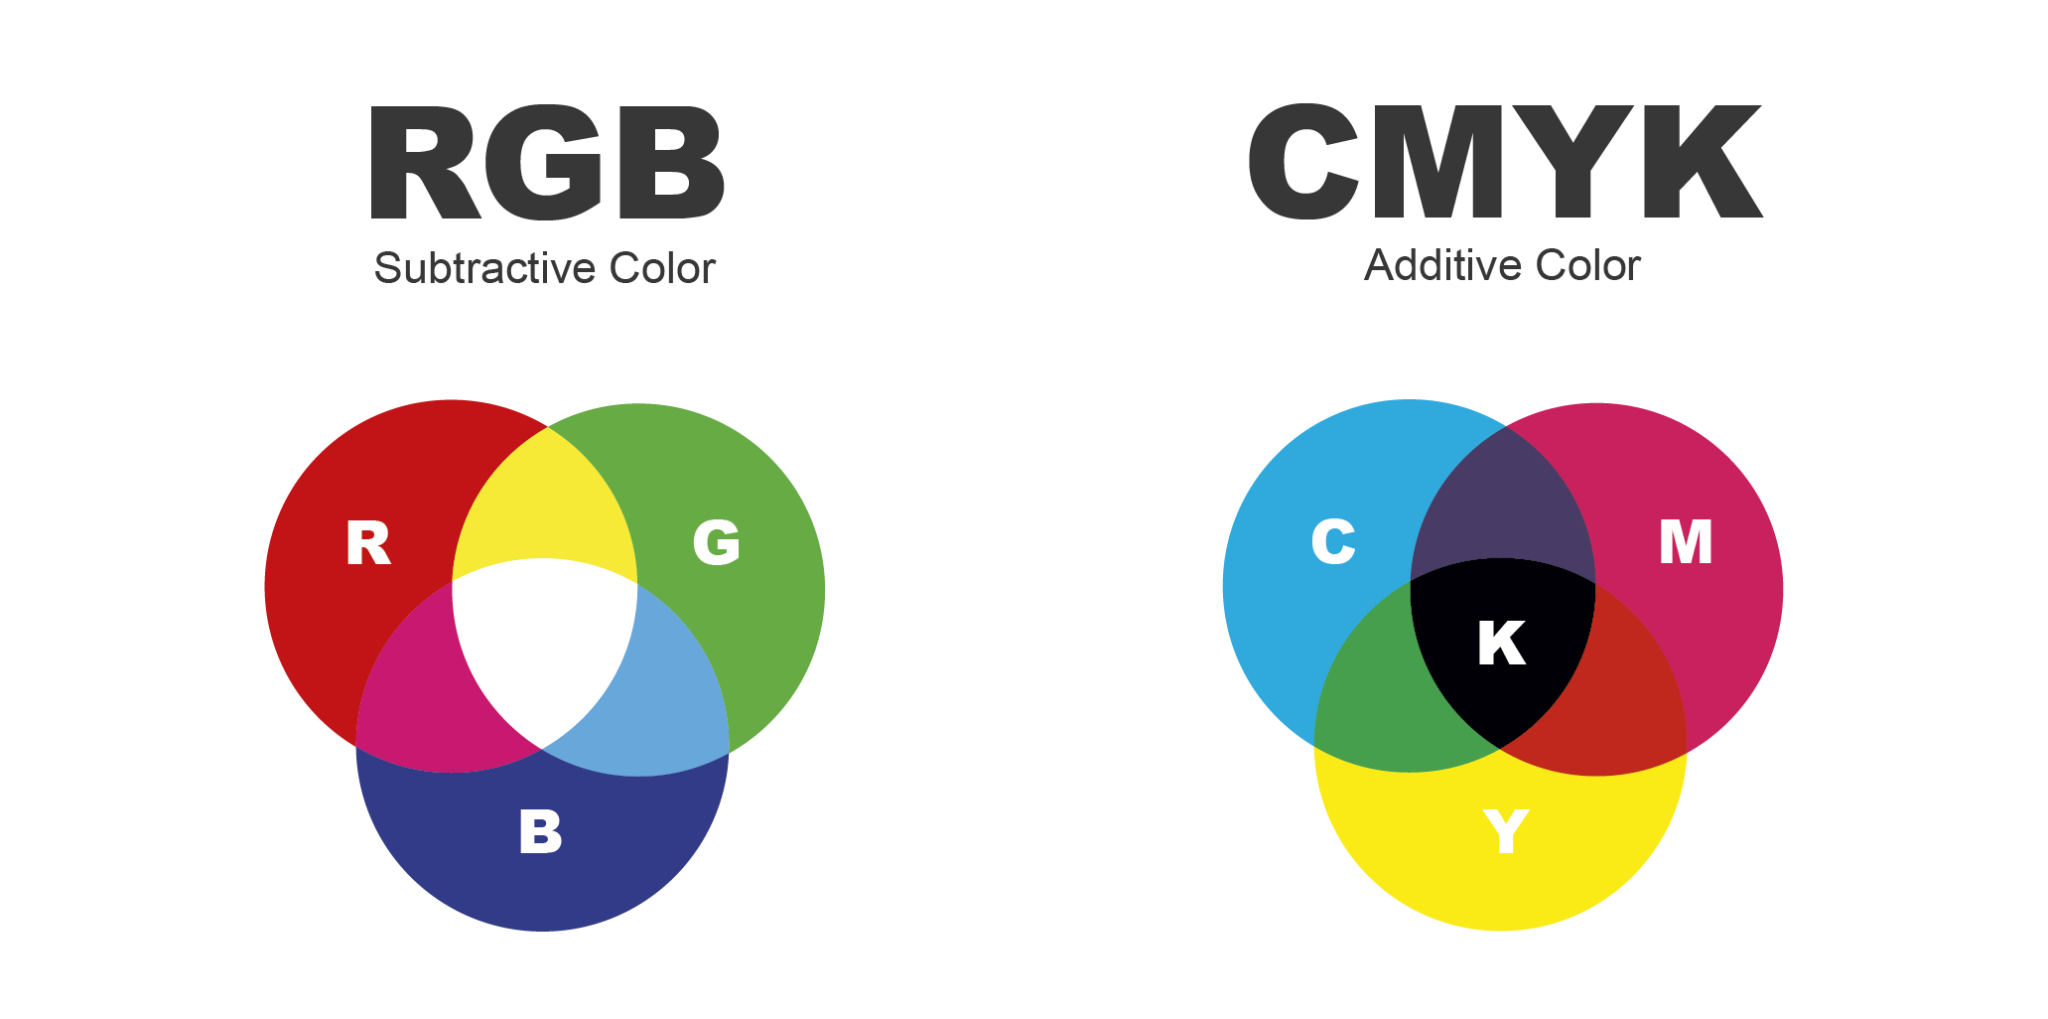 Cmyk 2. Цветовая модель RGB. Цветовая модель CMYK. Модель RGB И CMYK. Цветовая модель RGB И CMYK.